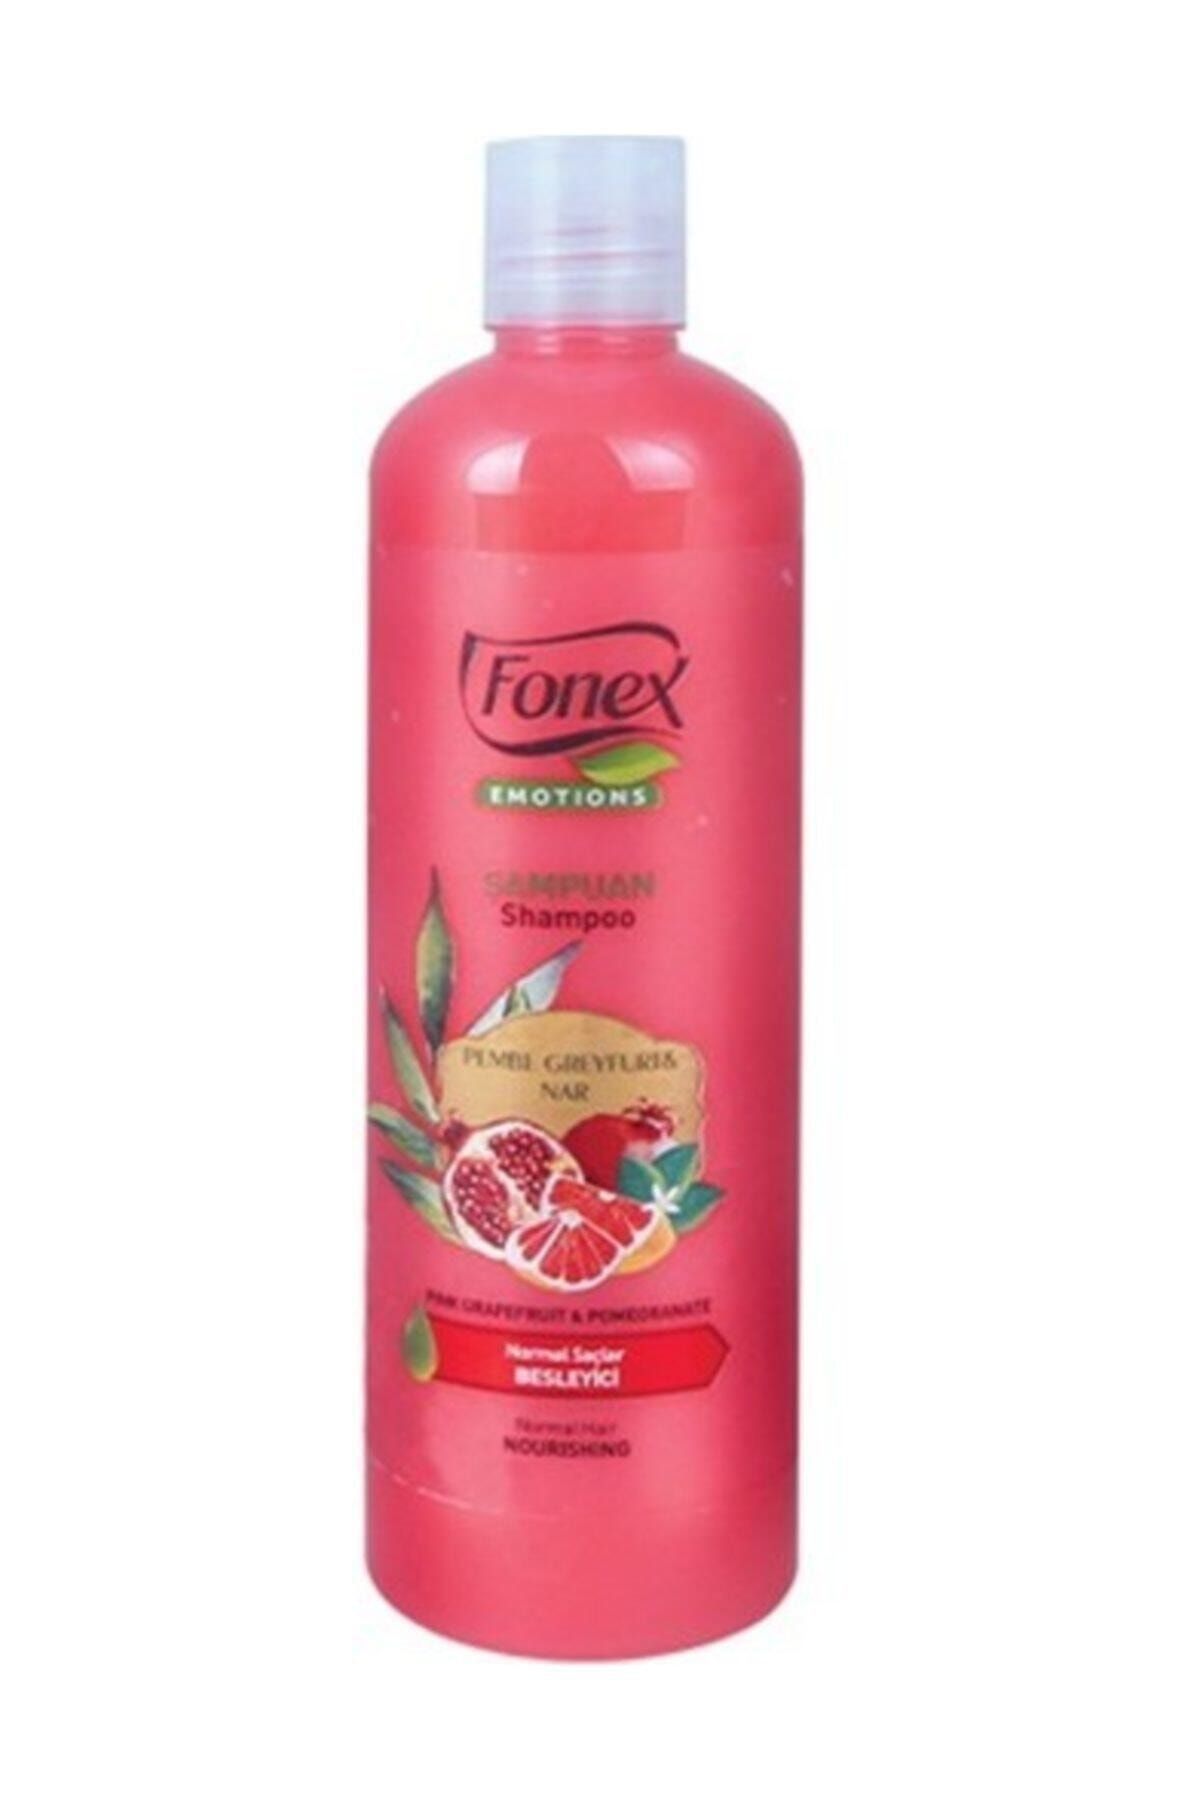 Fonex Emotions Şampuan 575 ml Greyfurt Nar